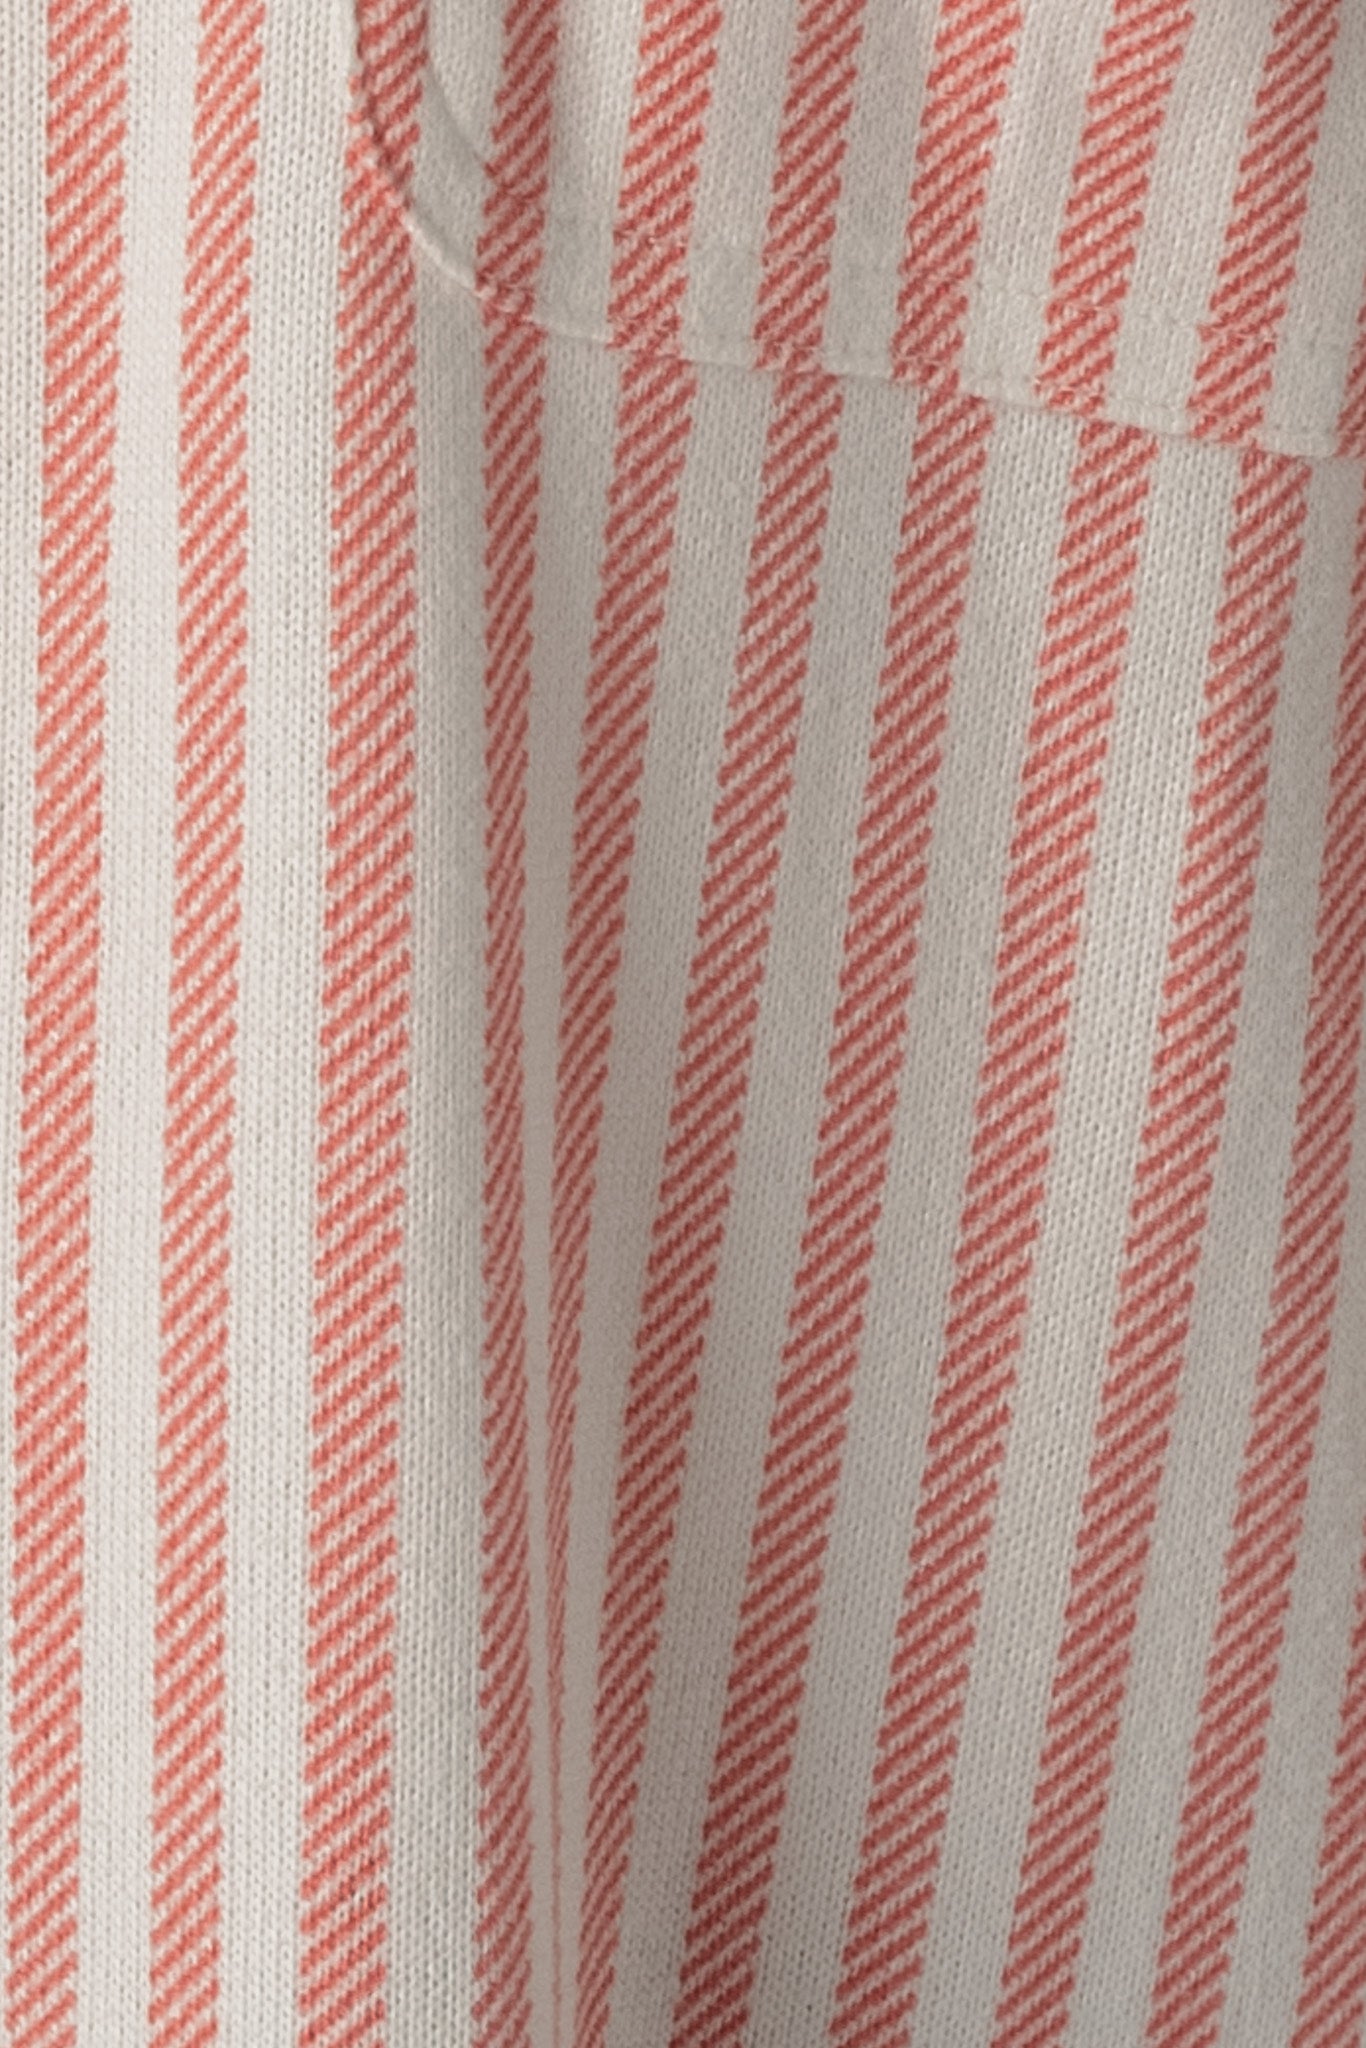 Railroad Stripe Soft Marina Shirt